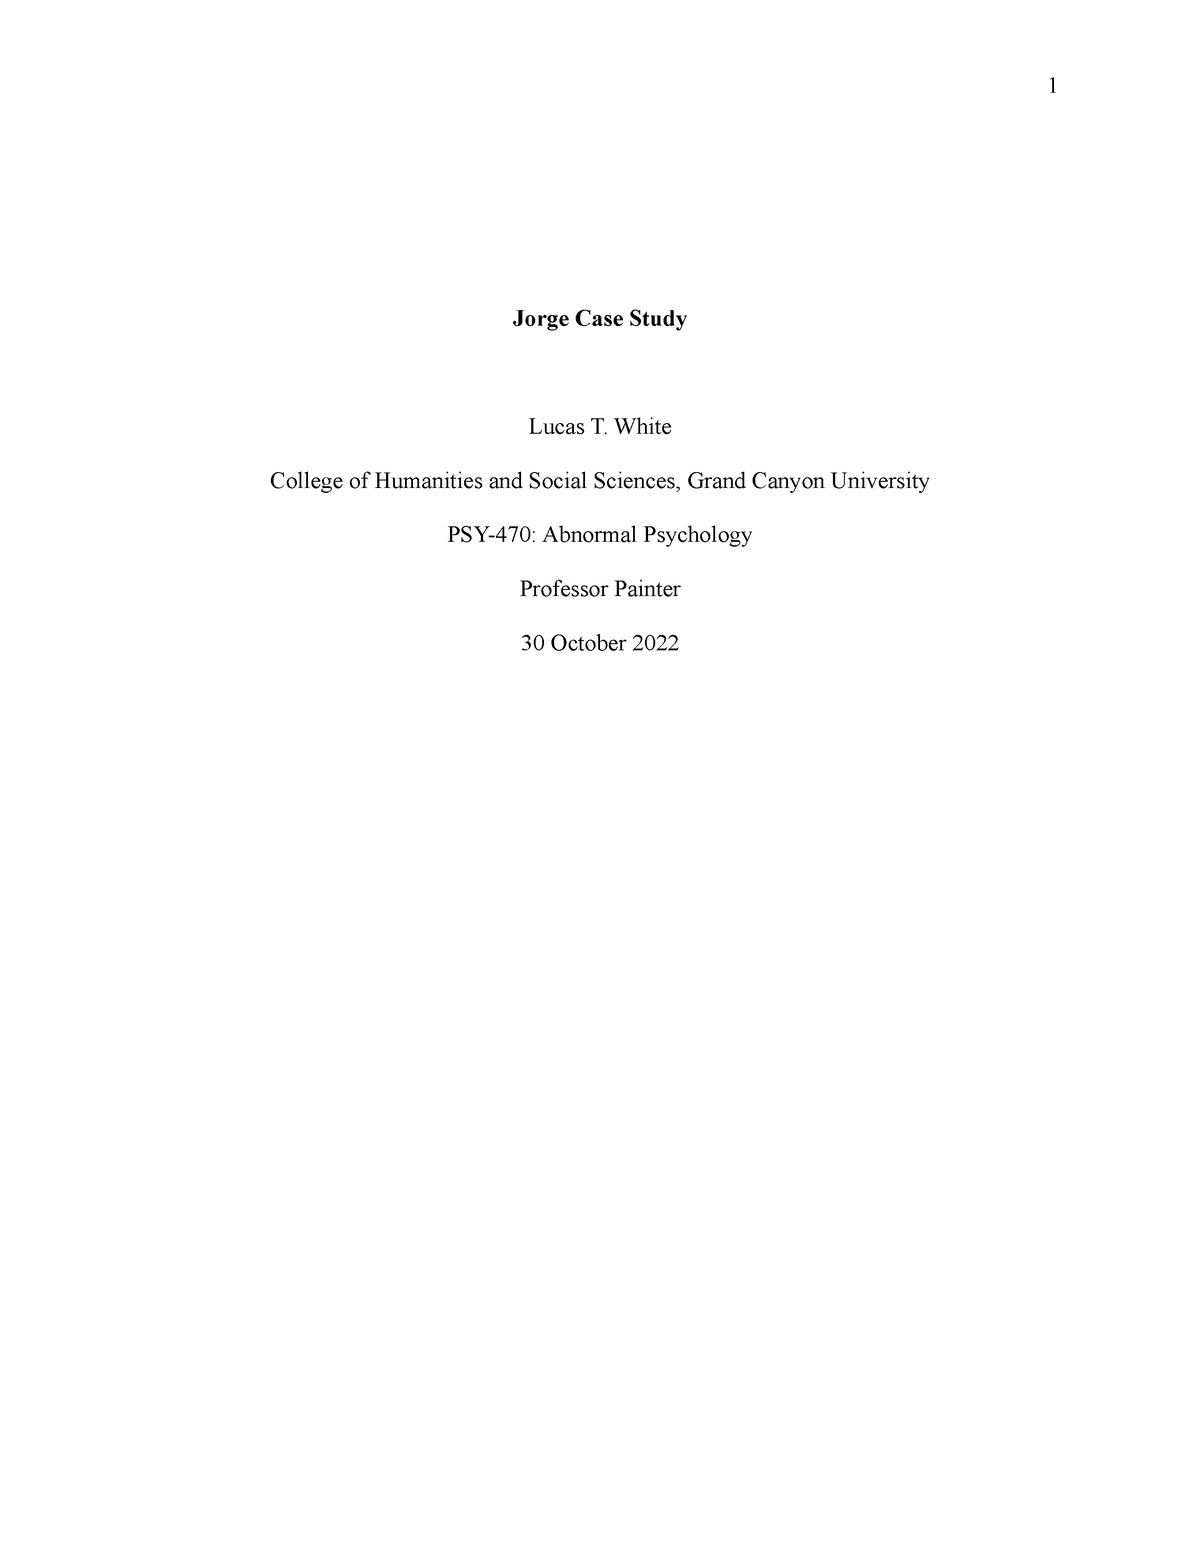 PSY-470 Jorge Case Study - Jorge Case Study Lucas T. White College of ...